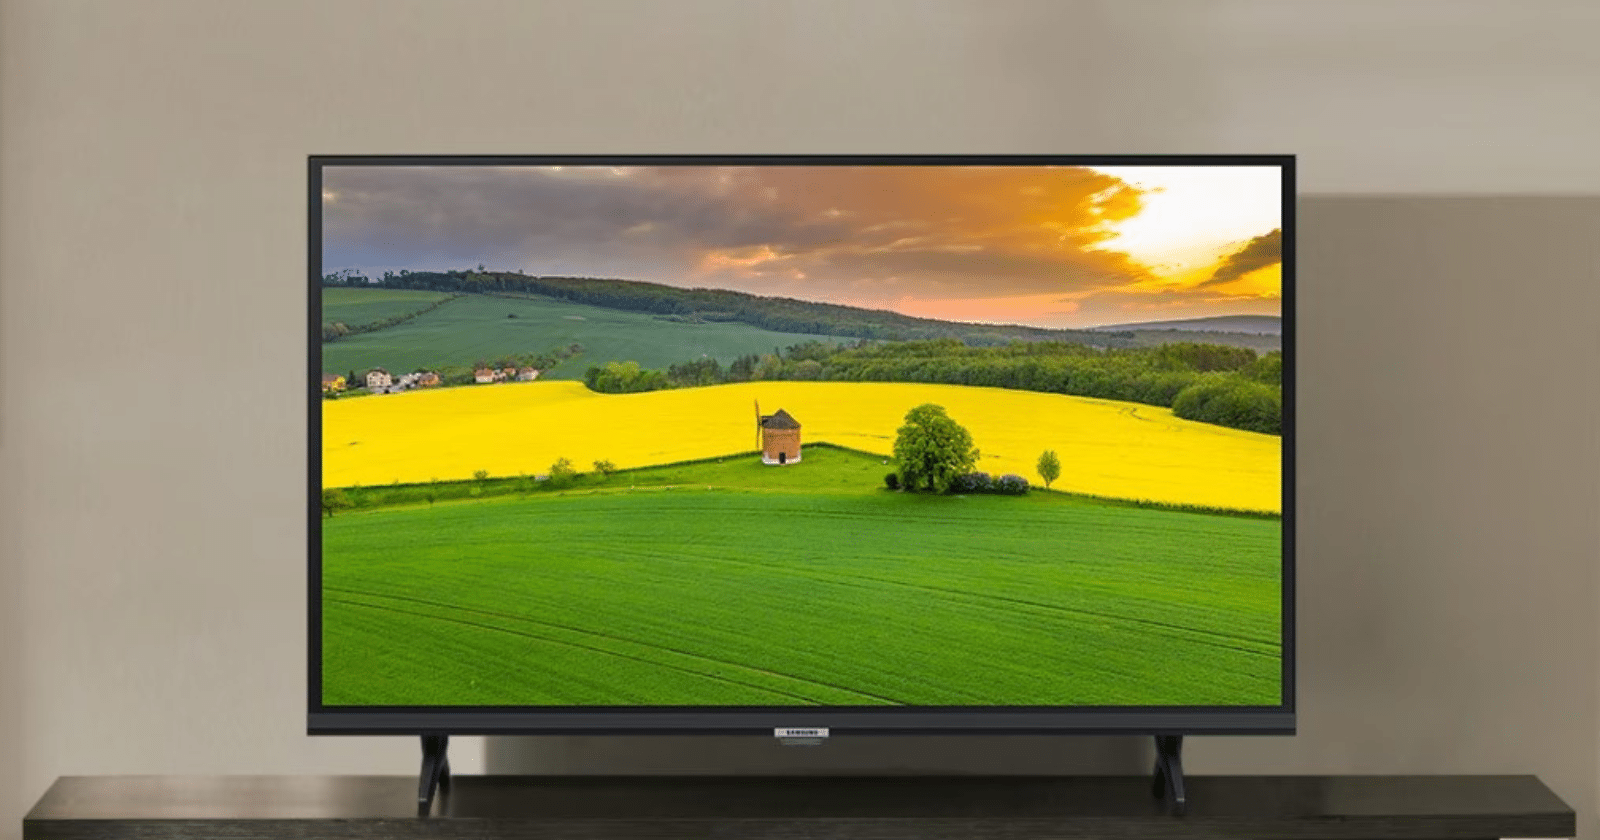 Gambar Produk Samsung Smart TV LED 32 Inch